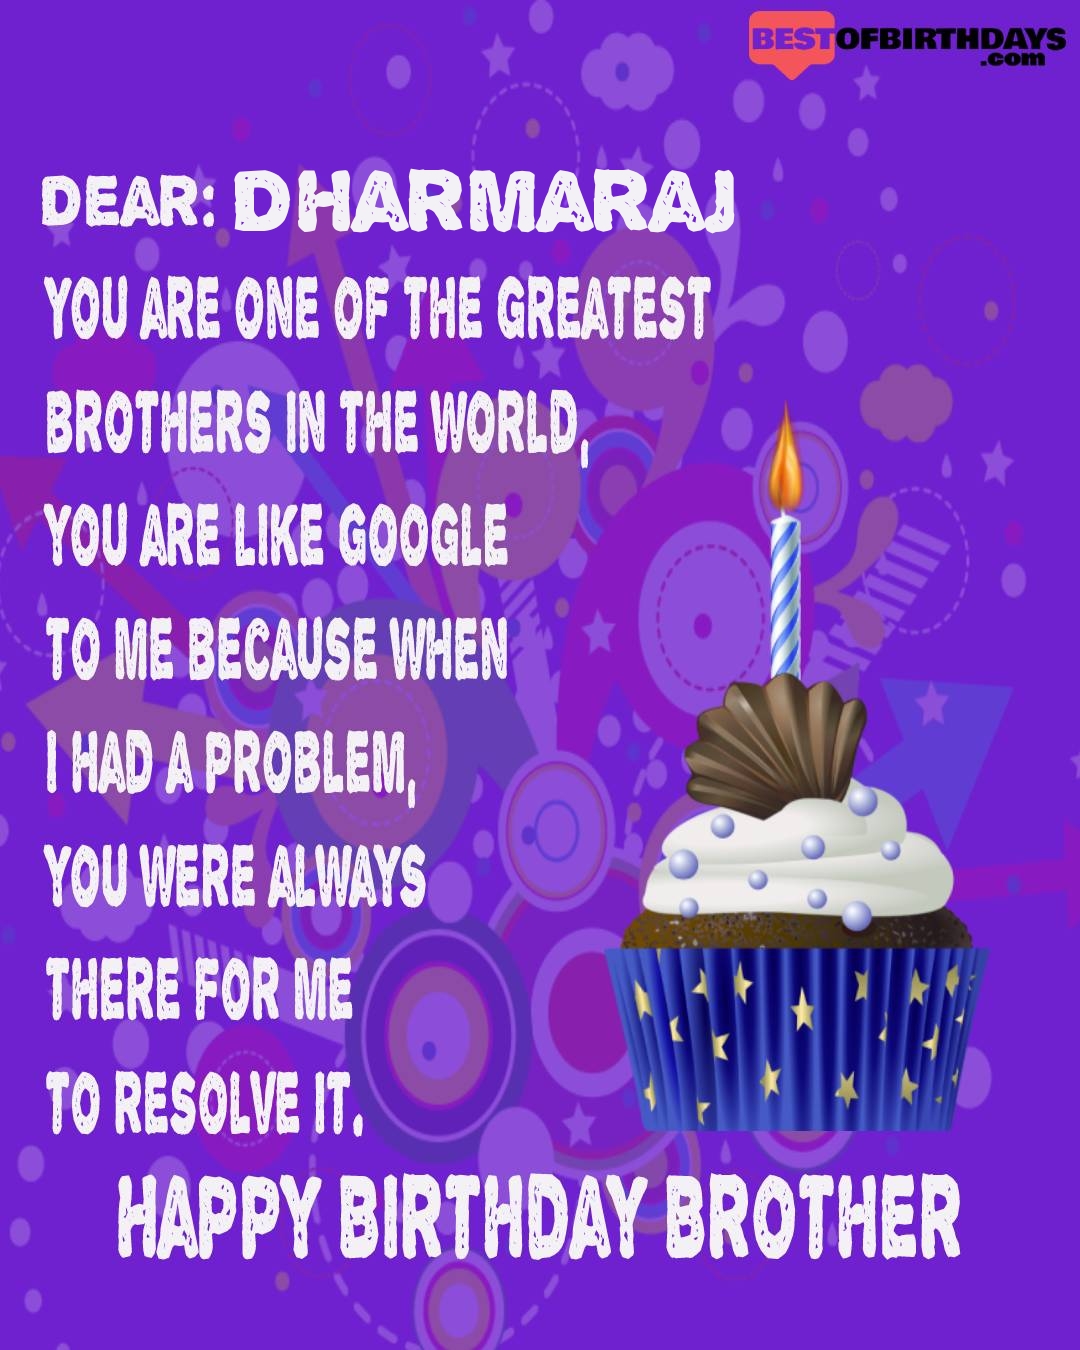 Happy birthday dharmaraj bhai brother bro